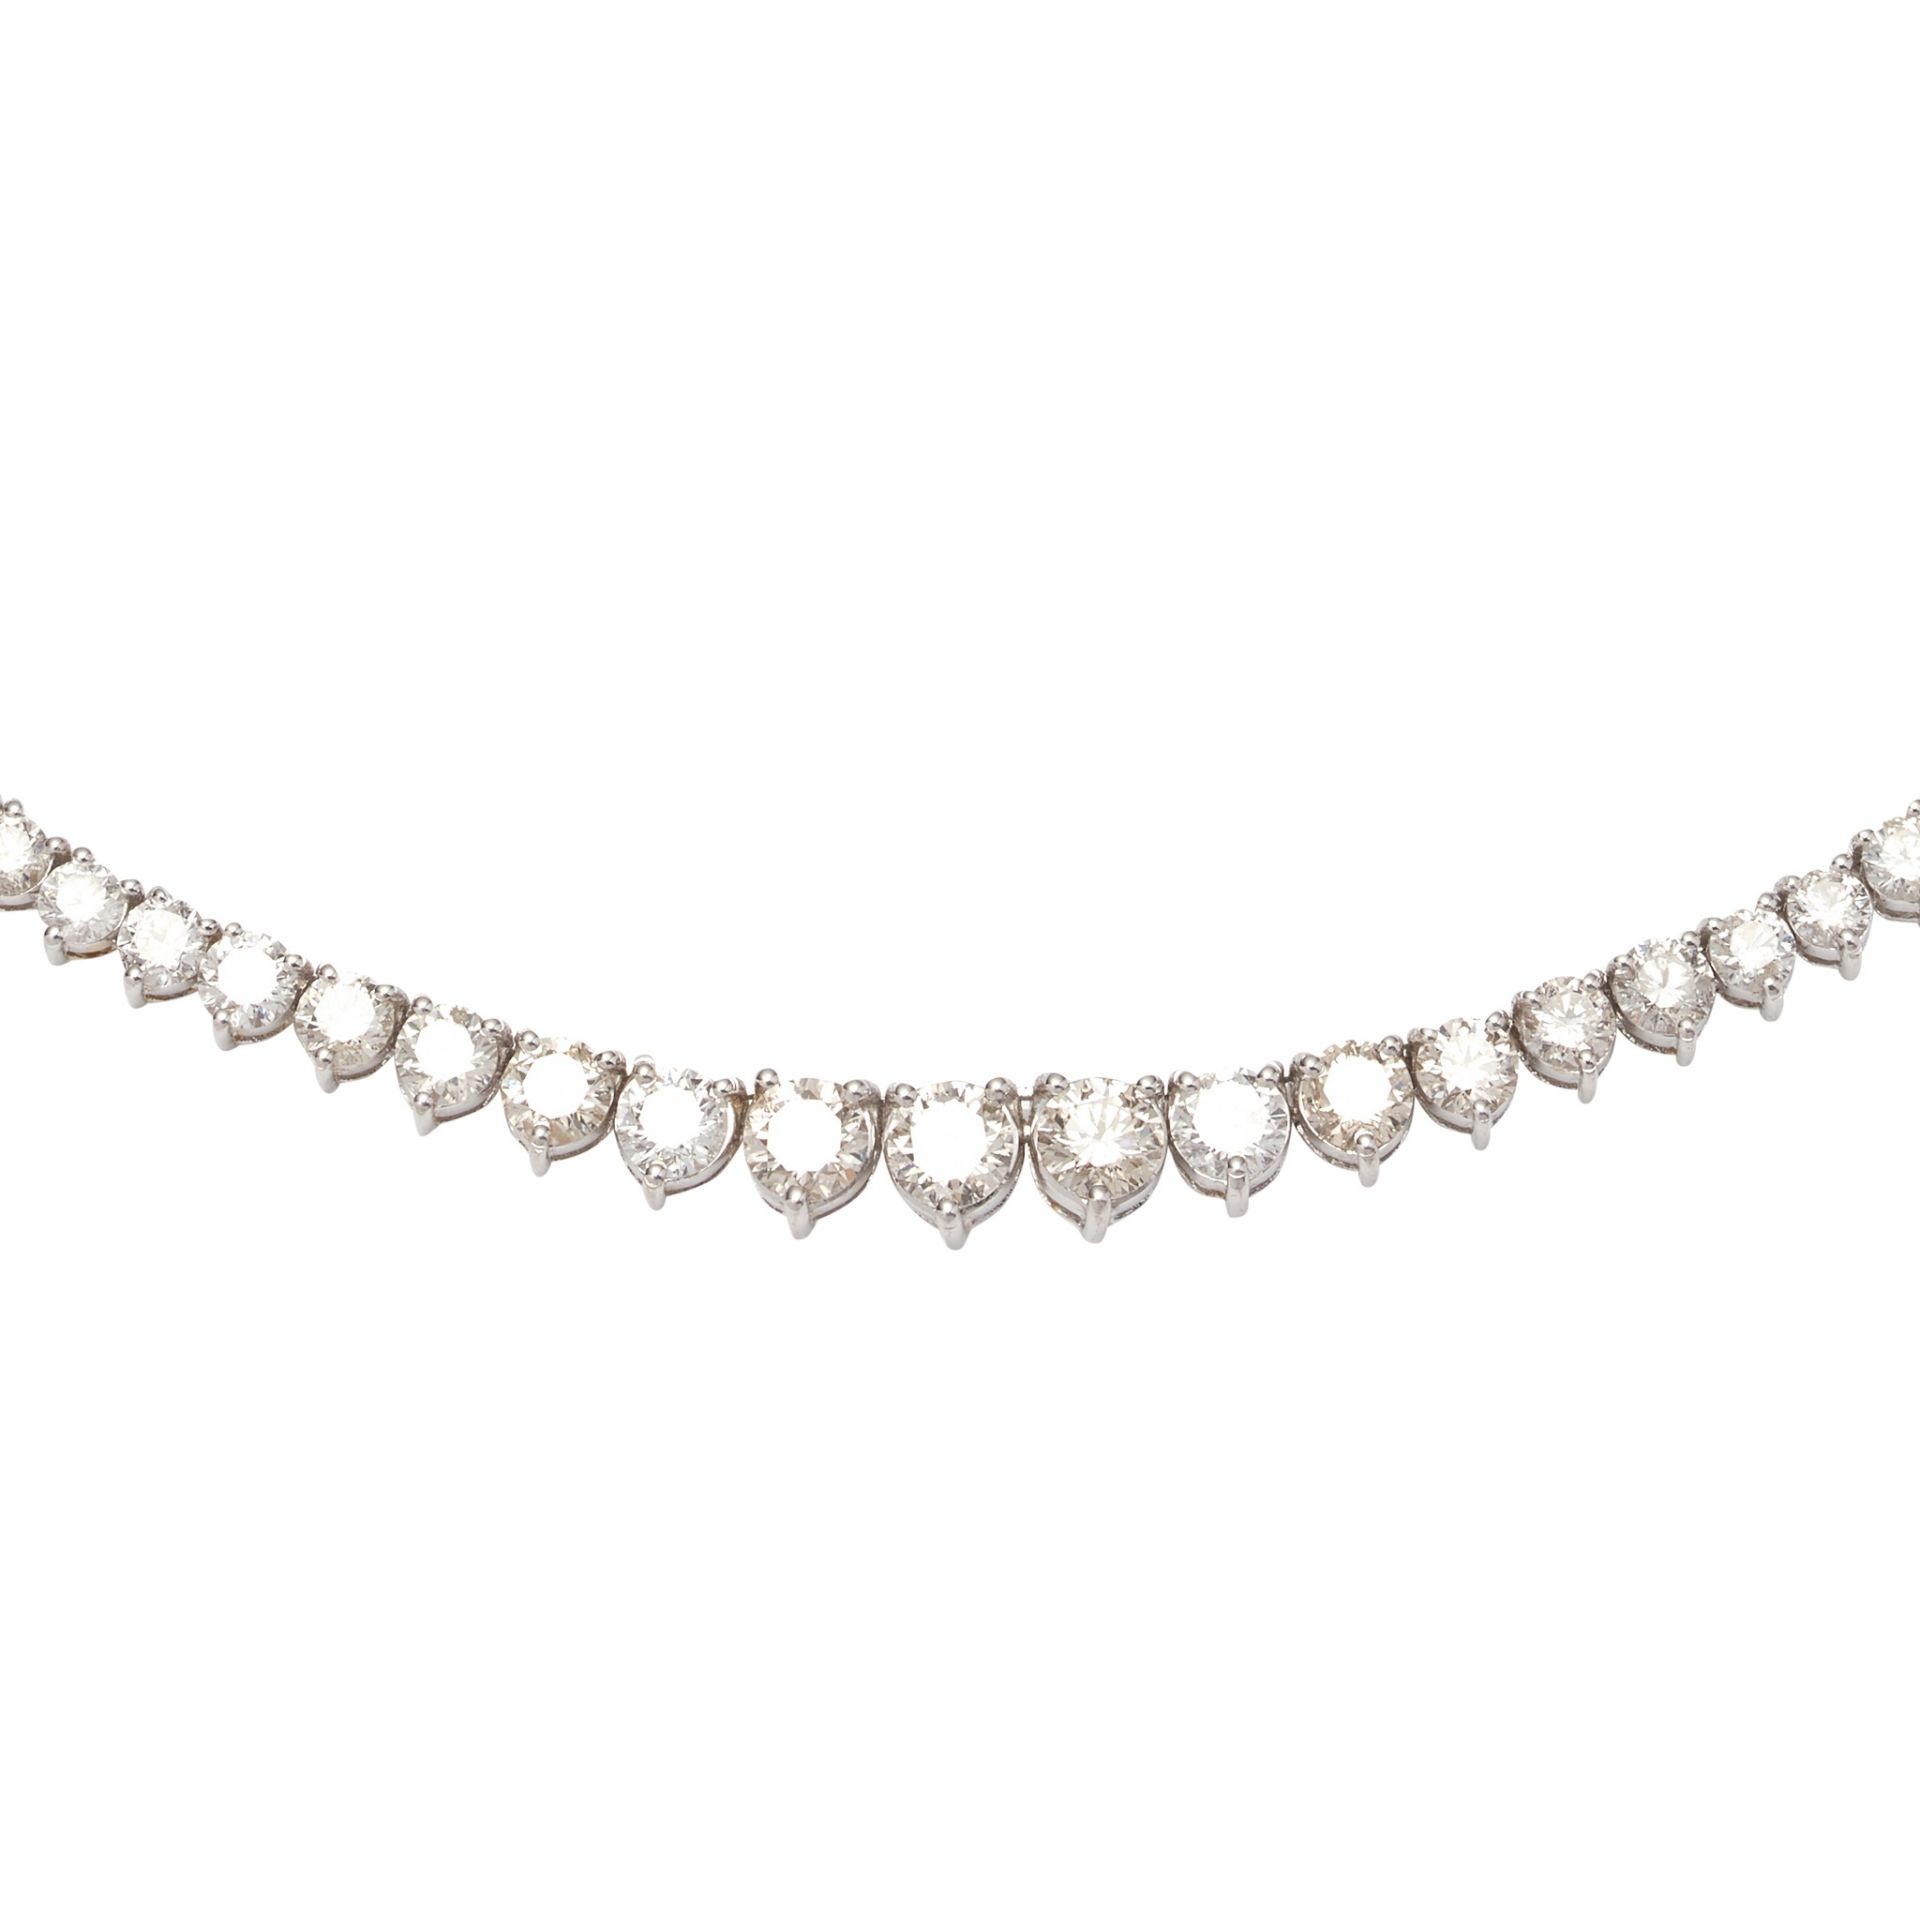 A diamond set necklace